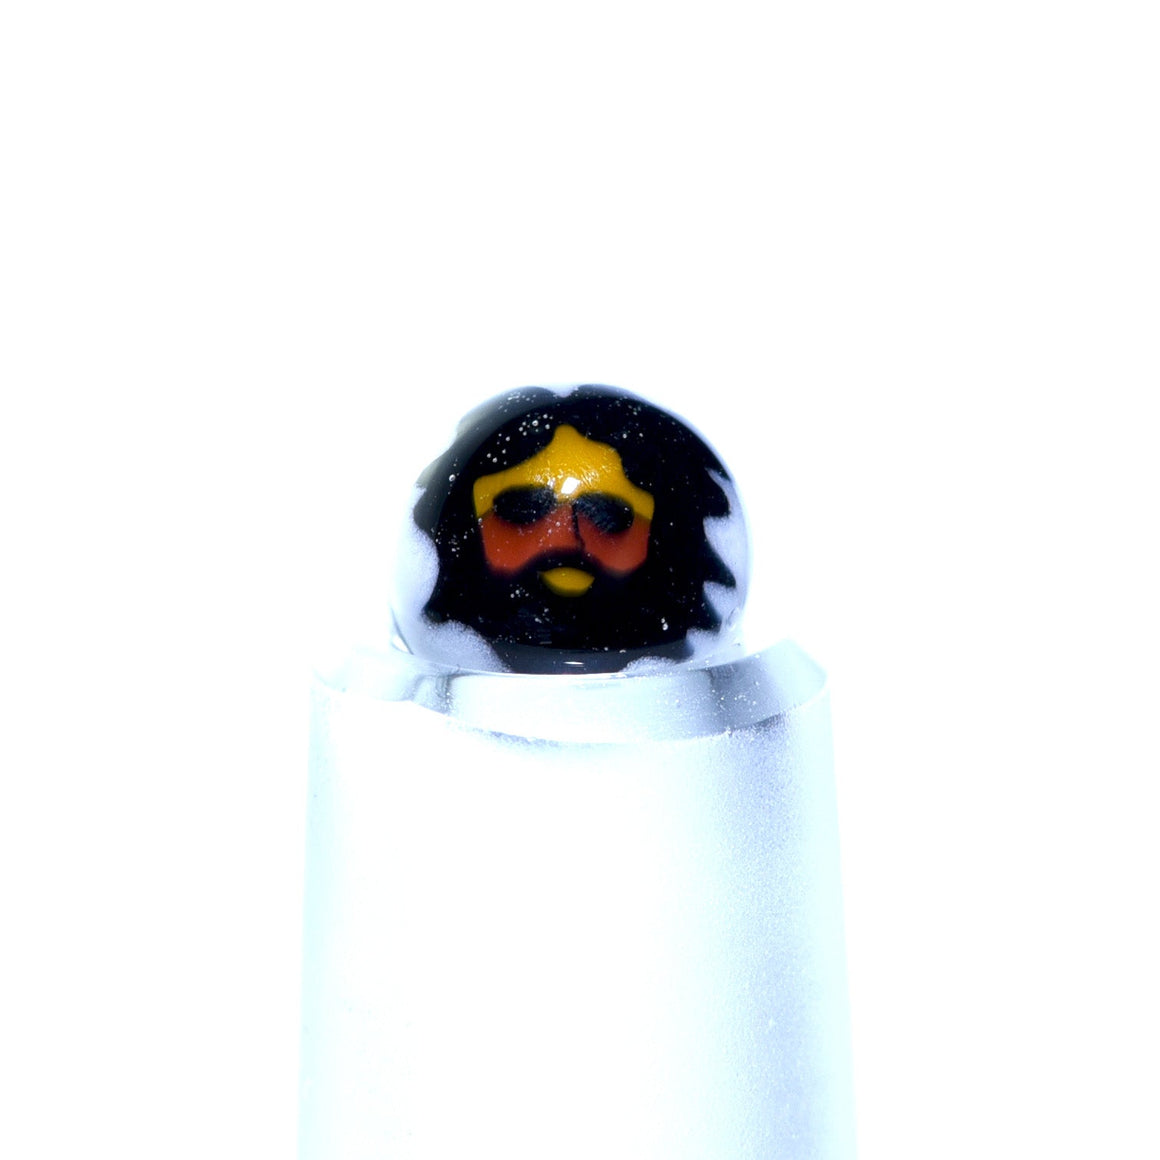 ~6mm Boro-encased Millie Terp Pearl by Ryan McCluer - Jerry Garcia